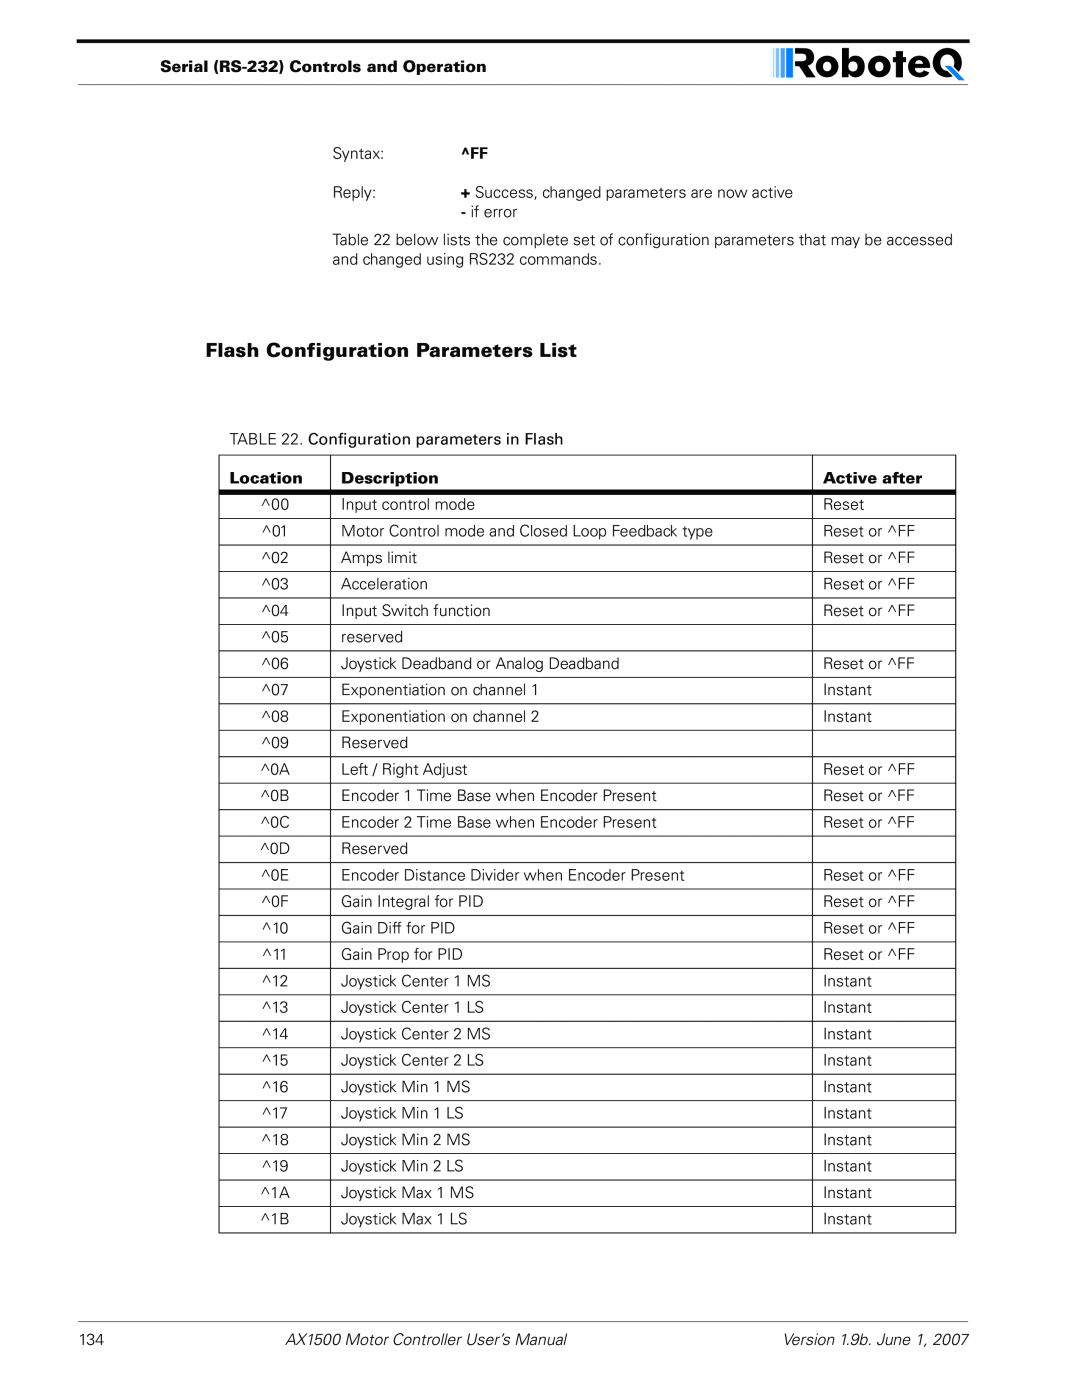 RoboteQ AX2550, AX1500 Flash Configuration Parameters List, Serial RS-232 Controls and Operation, Location, Description 